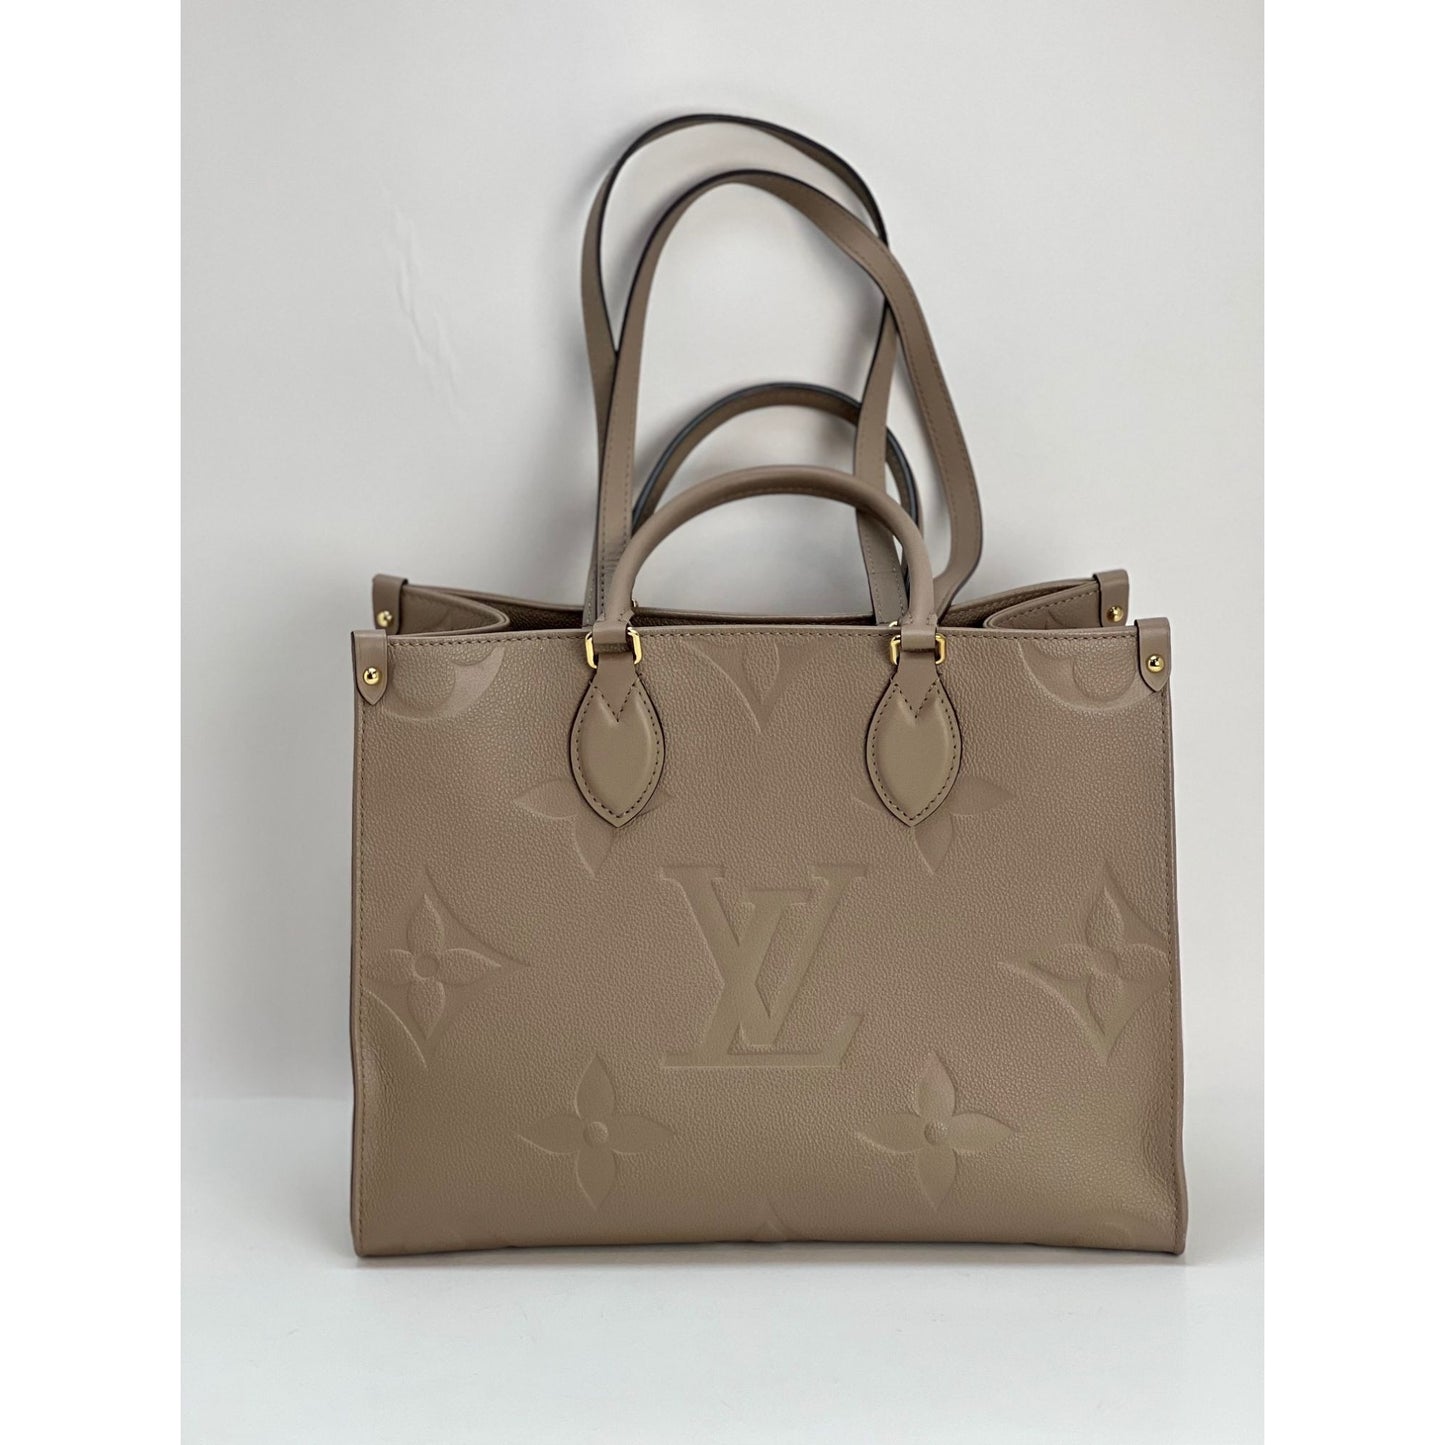 Louis Vuitton - Onthego mm - Monogram Leather - Black / Beige - Women - Handbag - Luxury